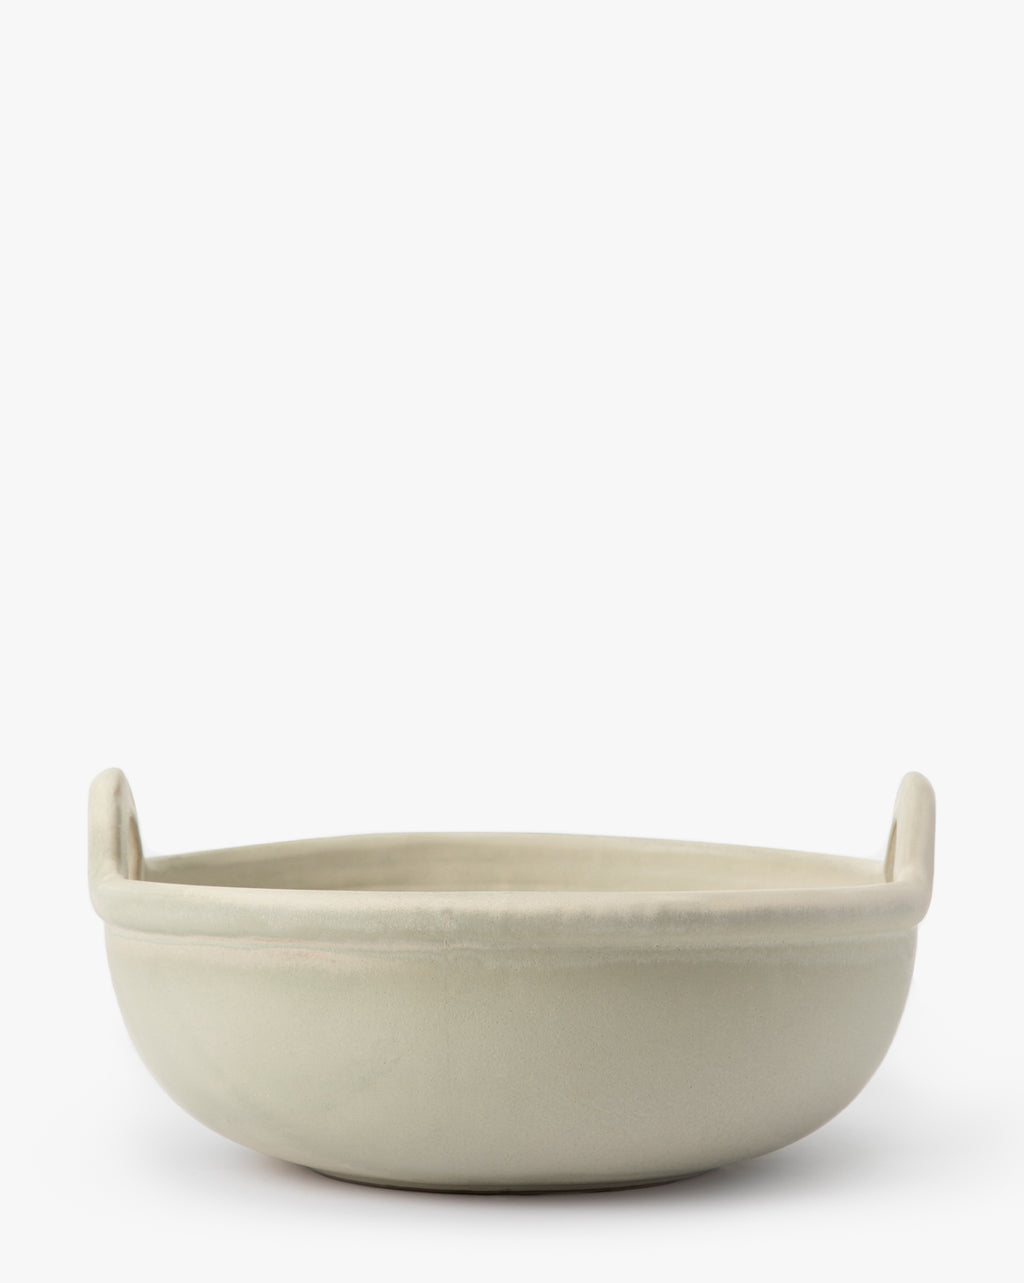 Handled Stoneware Serving Bowl